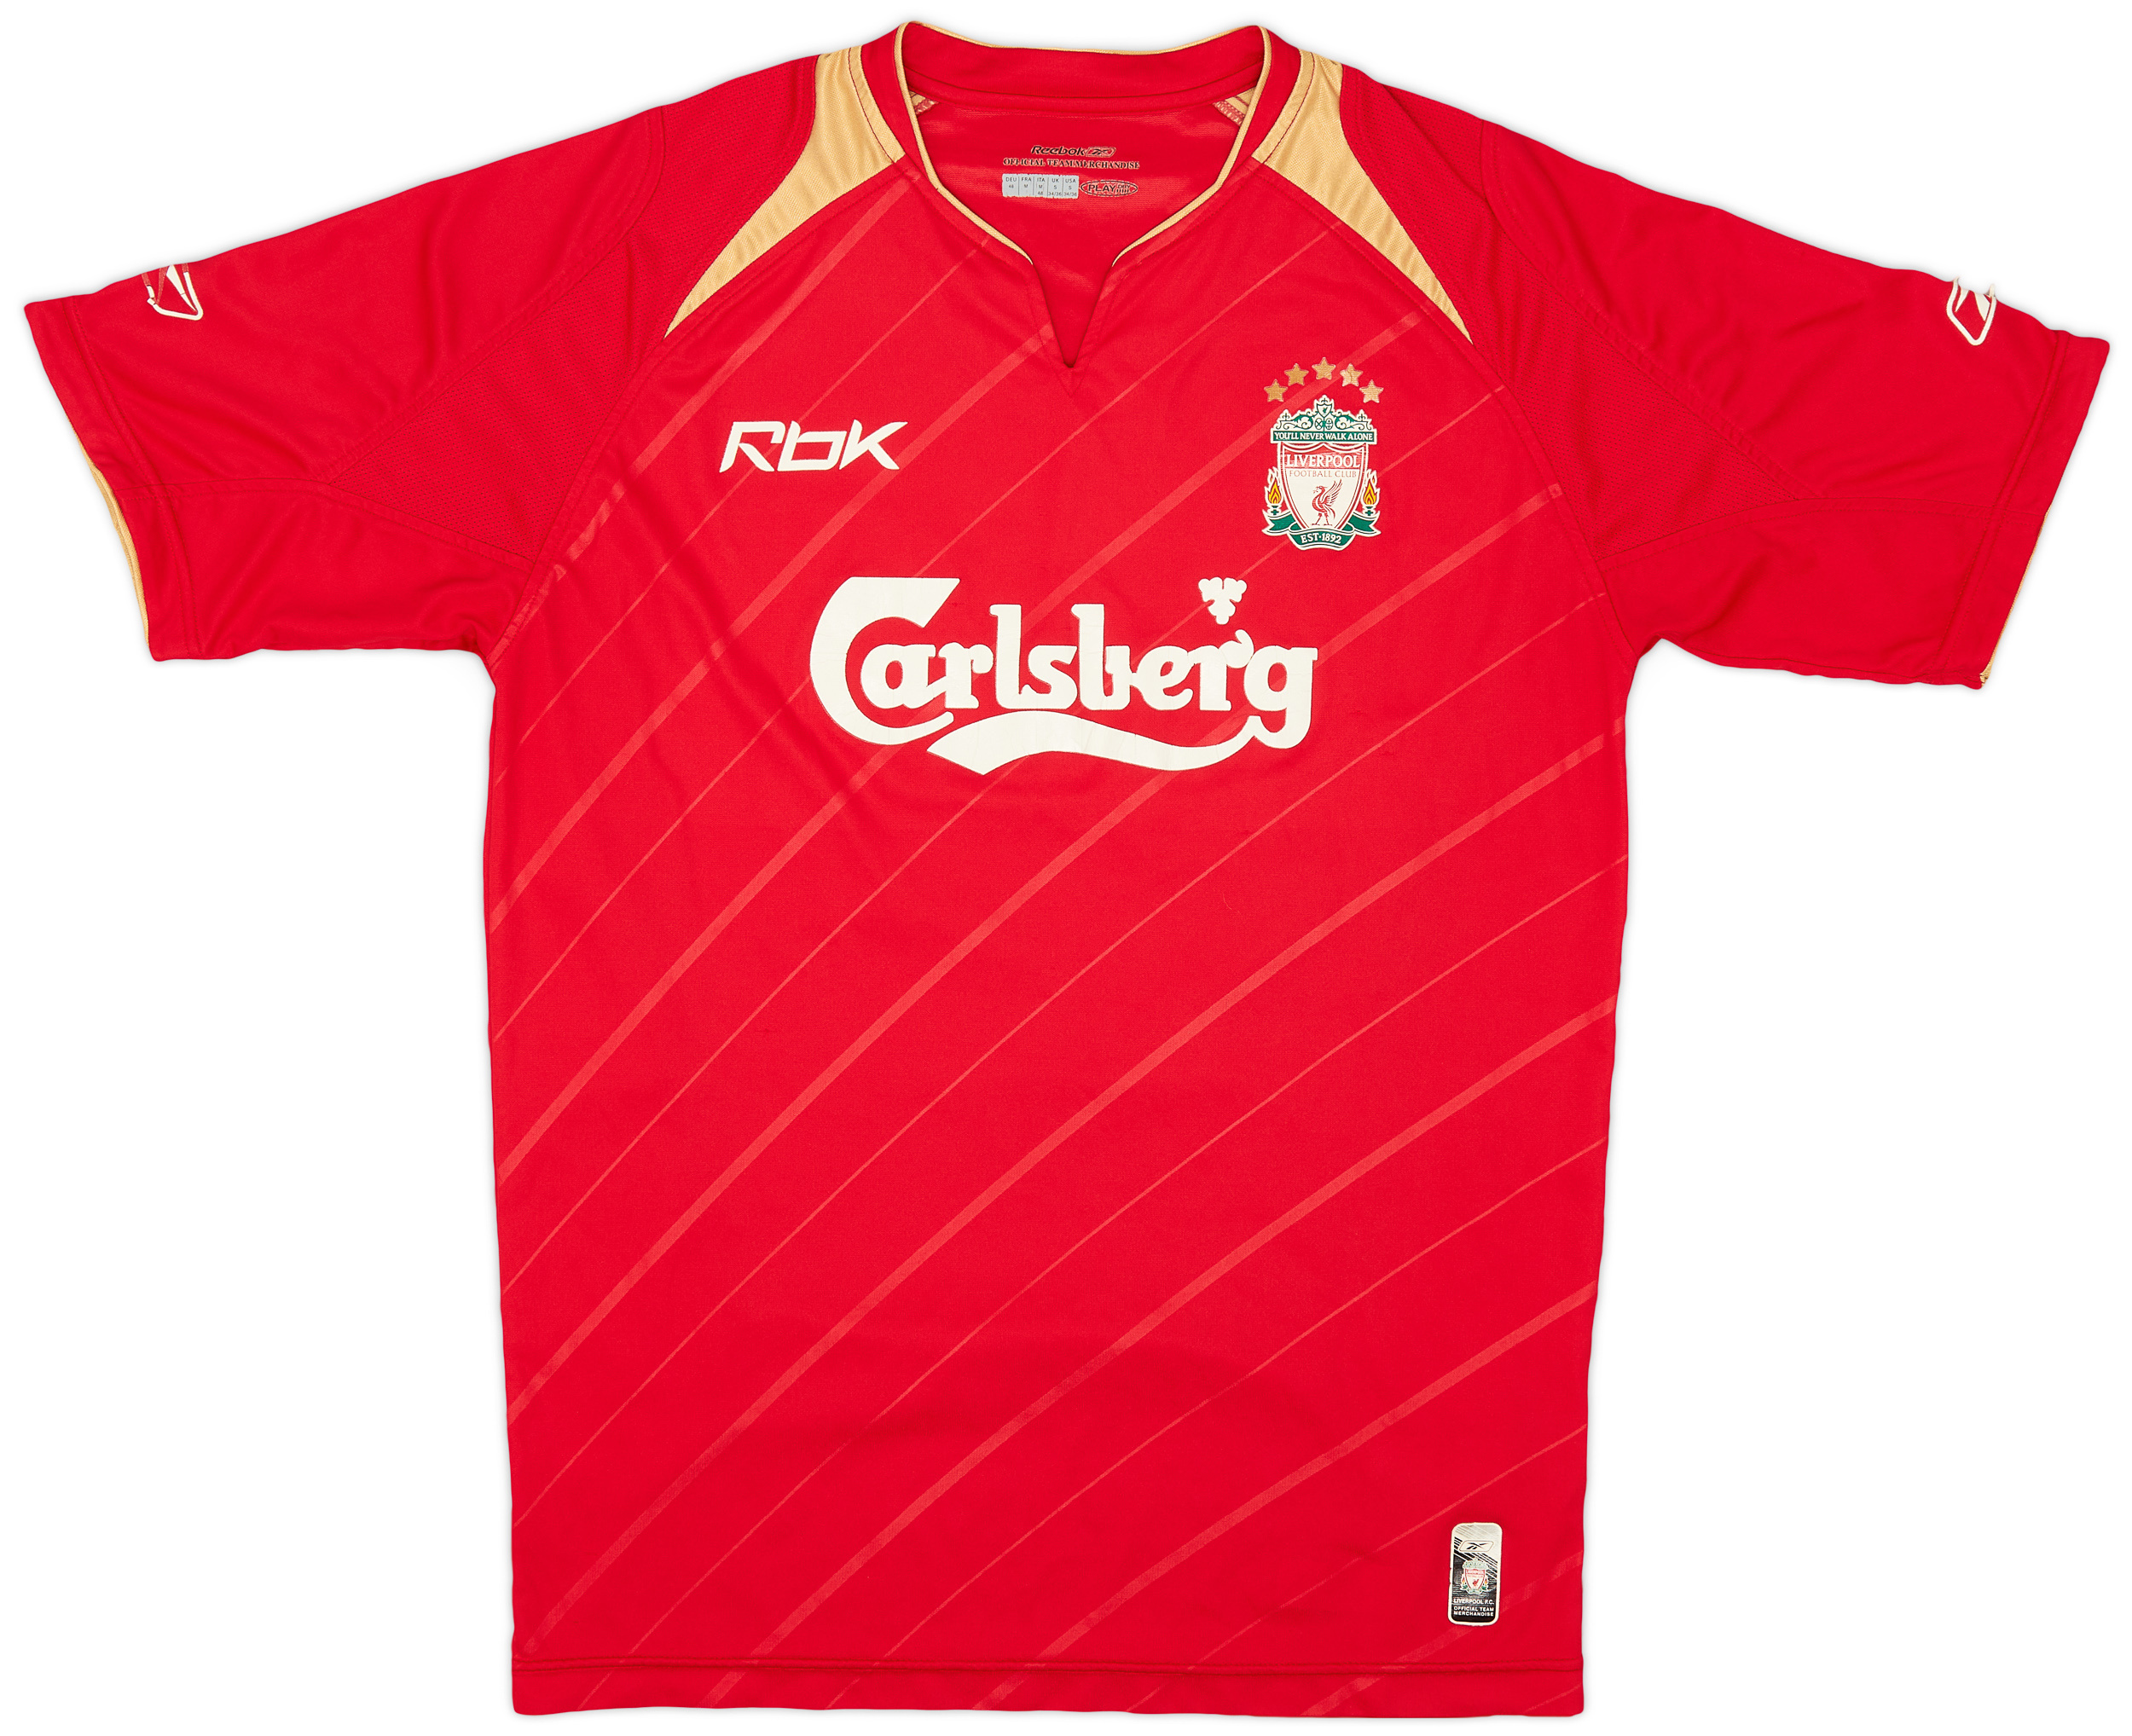 2005-06 Liverpool CL Home Shirt - 4/10 - ()